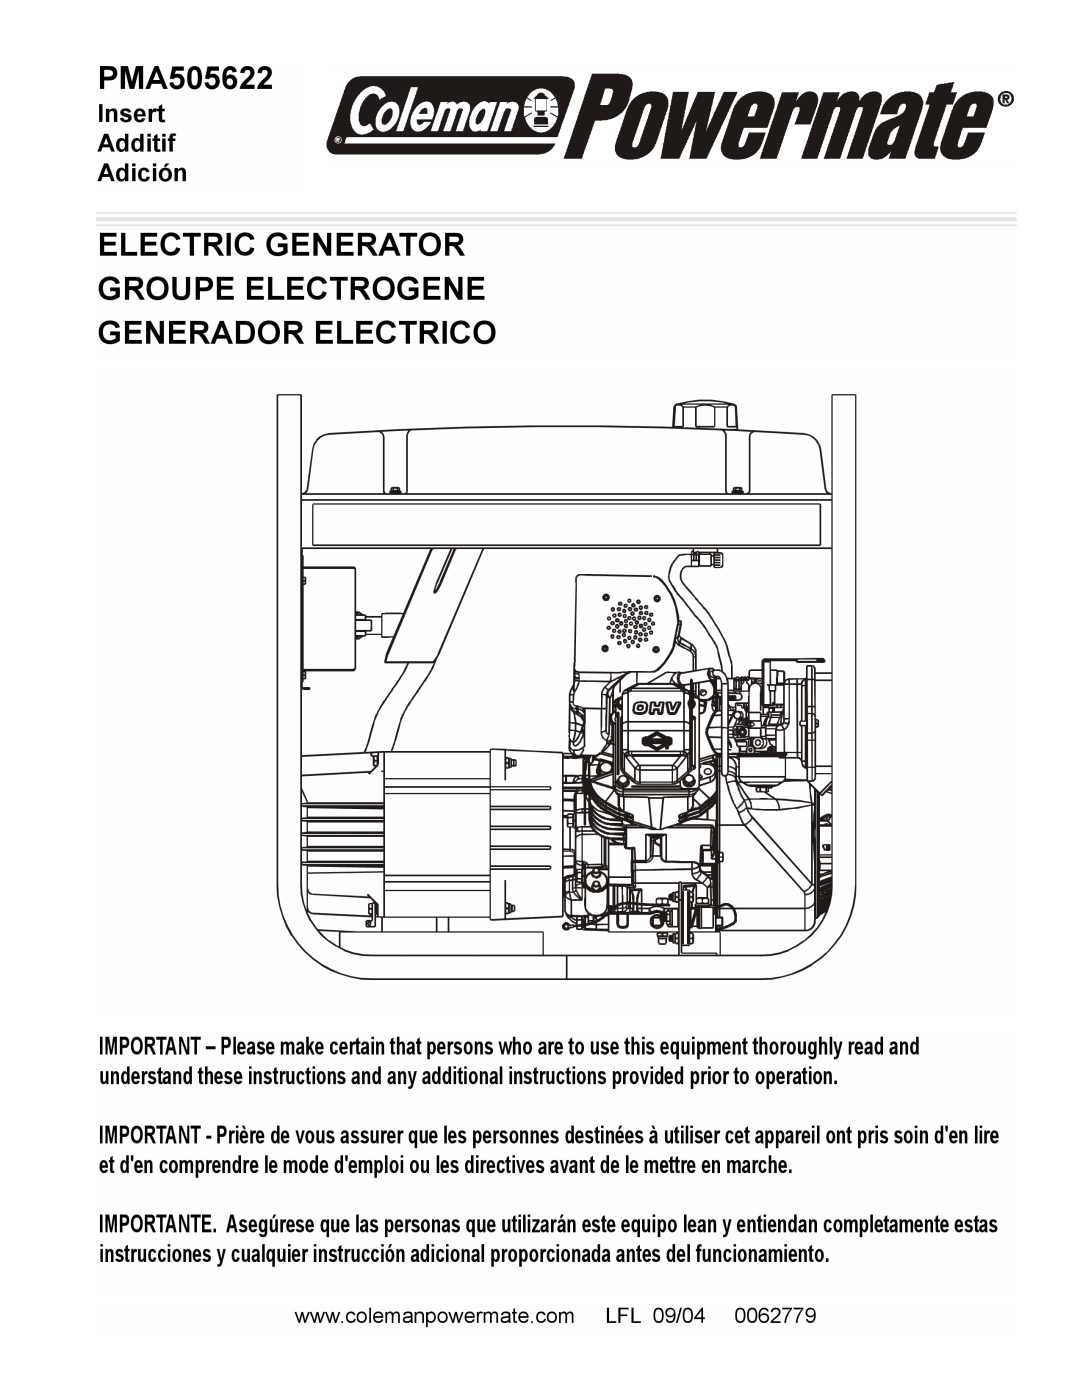 Powermate PMA505622 manual Electric Generator Groupe Electrogene Generador Electrico, Insert Additif Adición 